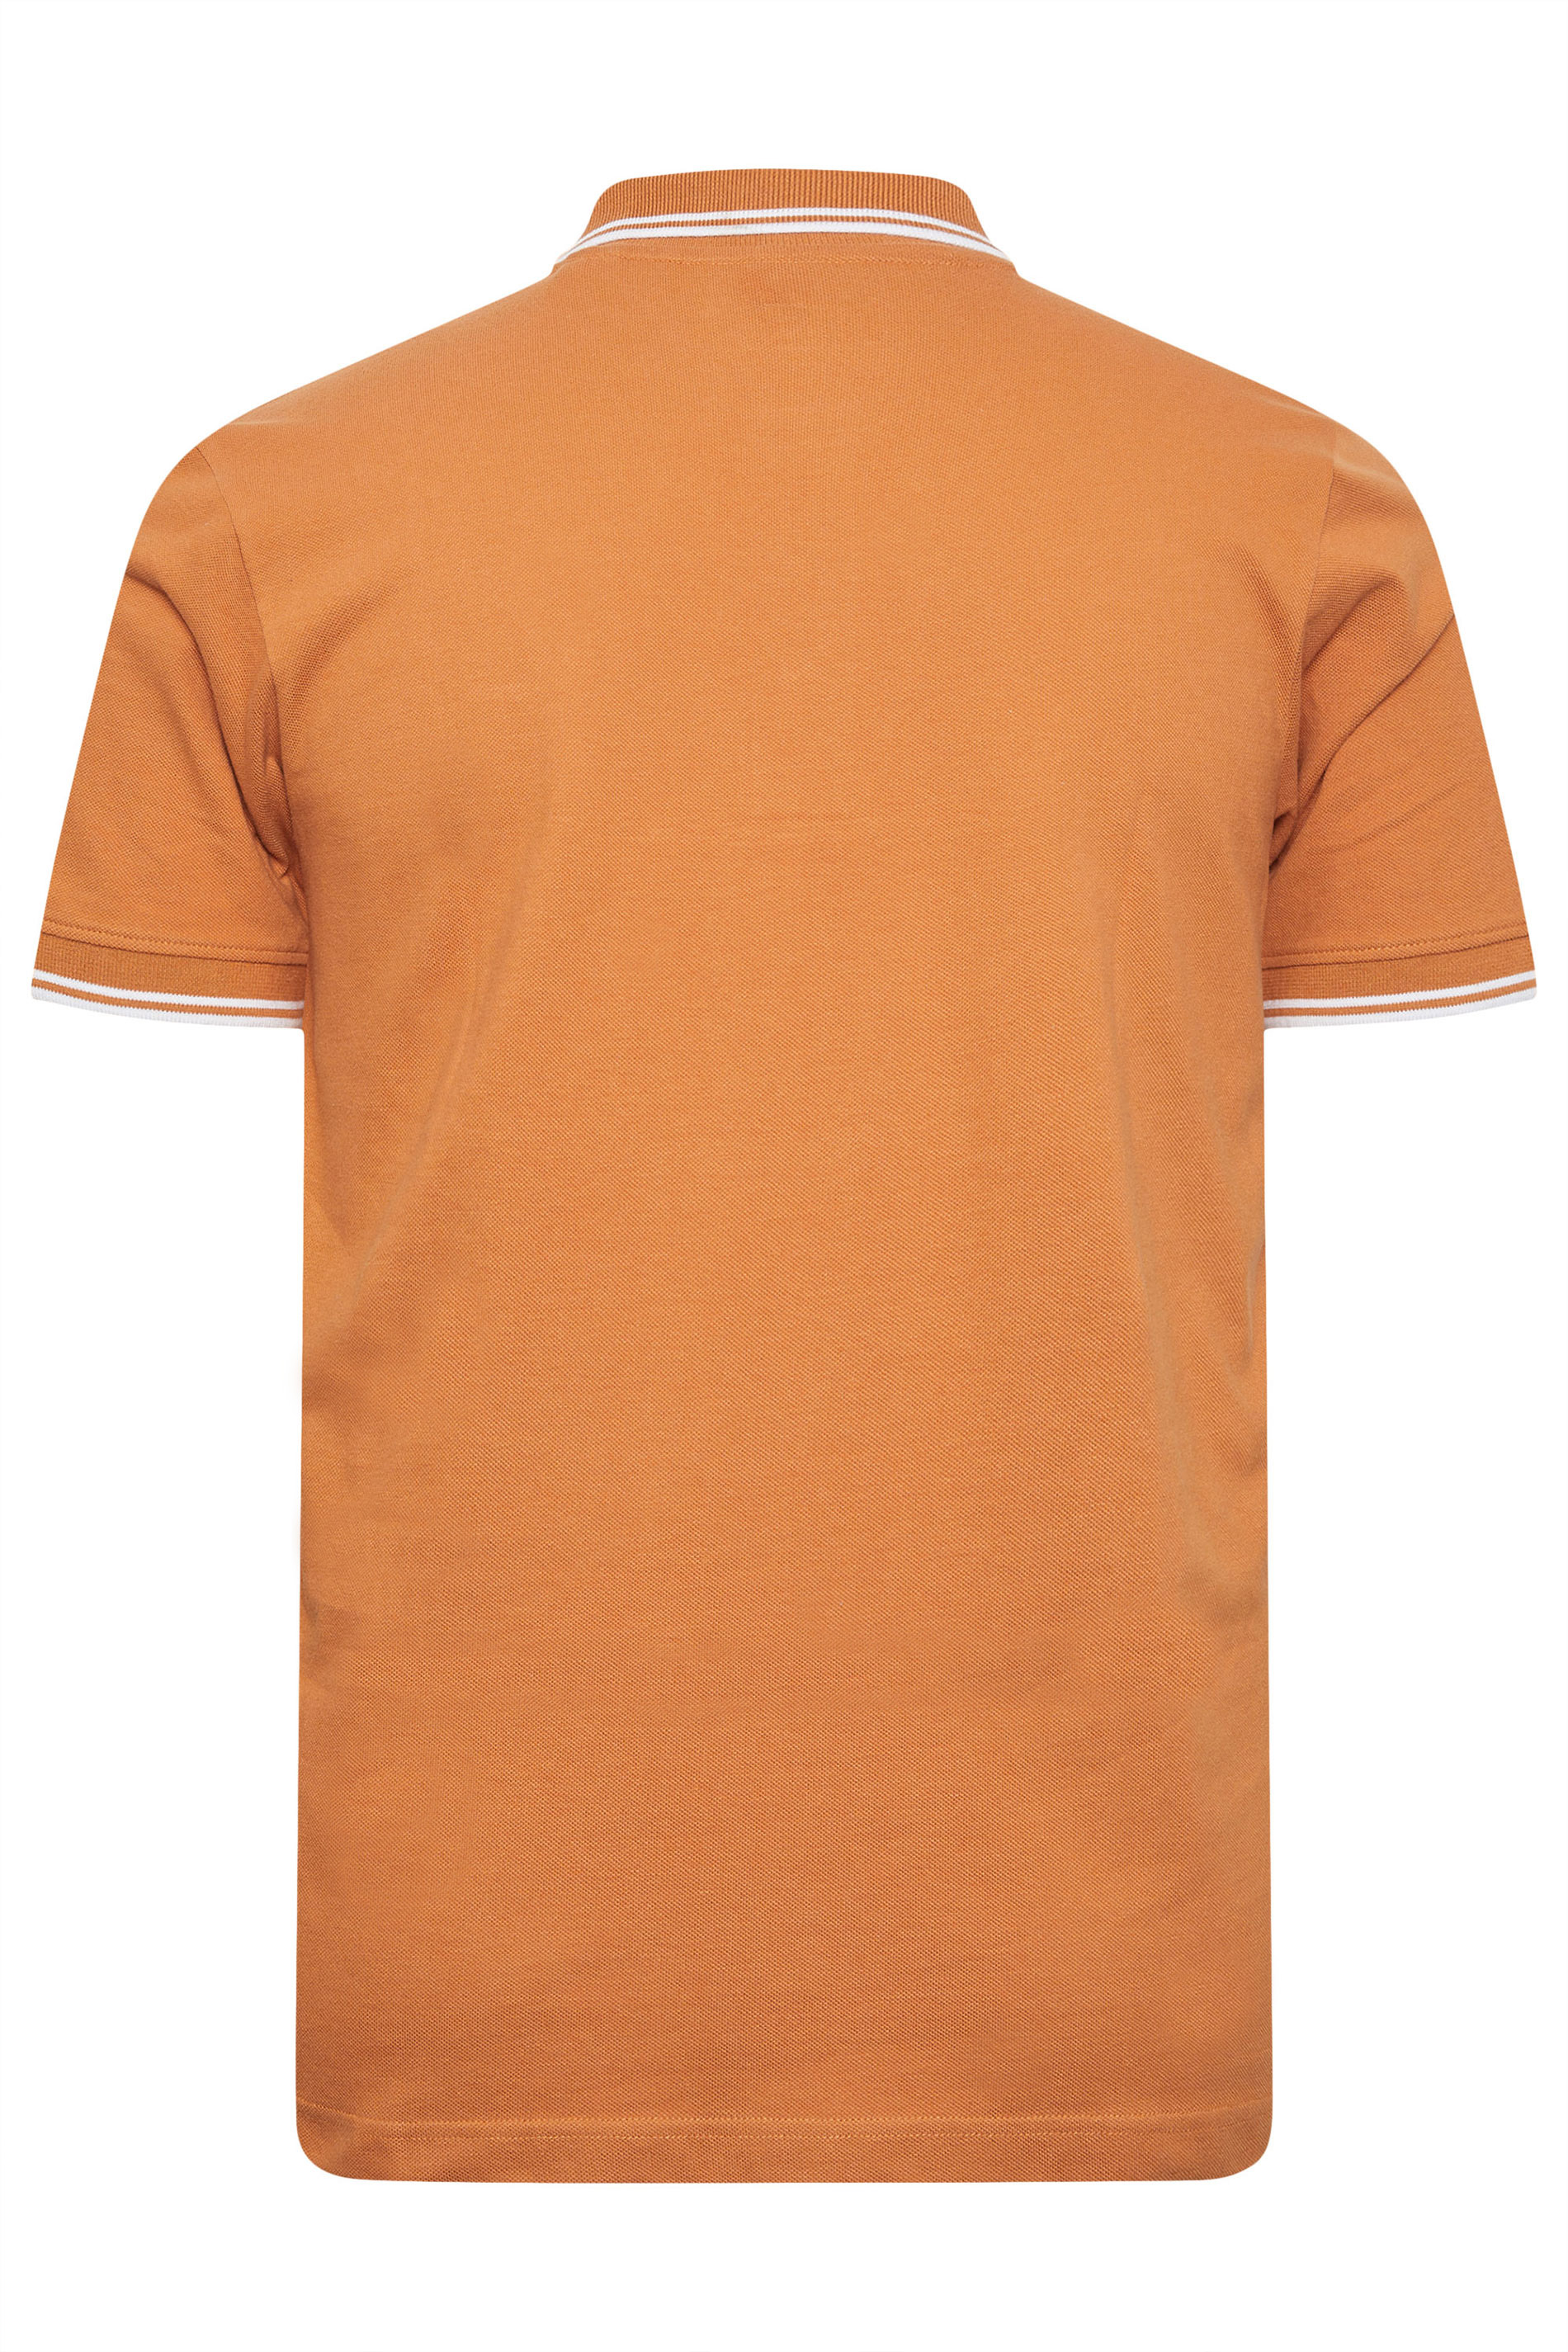 BadRhino Big & Tall Rust Orange Tipped Polo Shirt | Bad Rhino 3